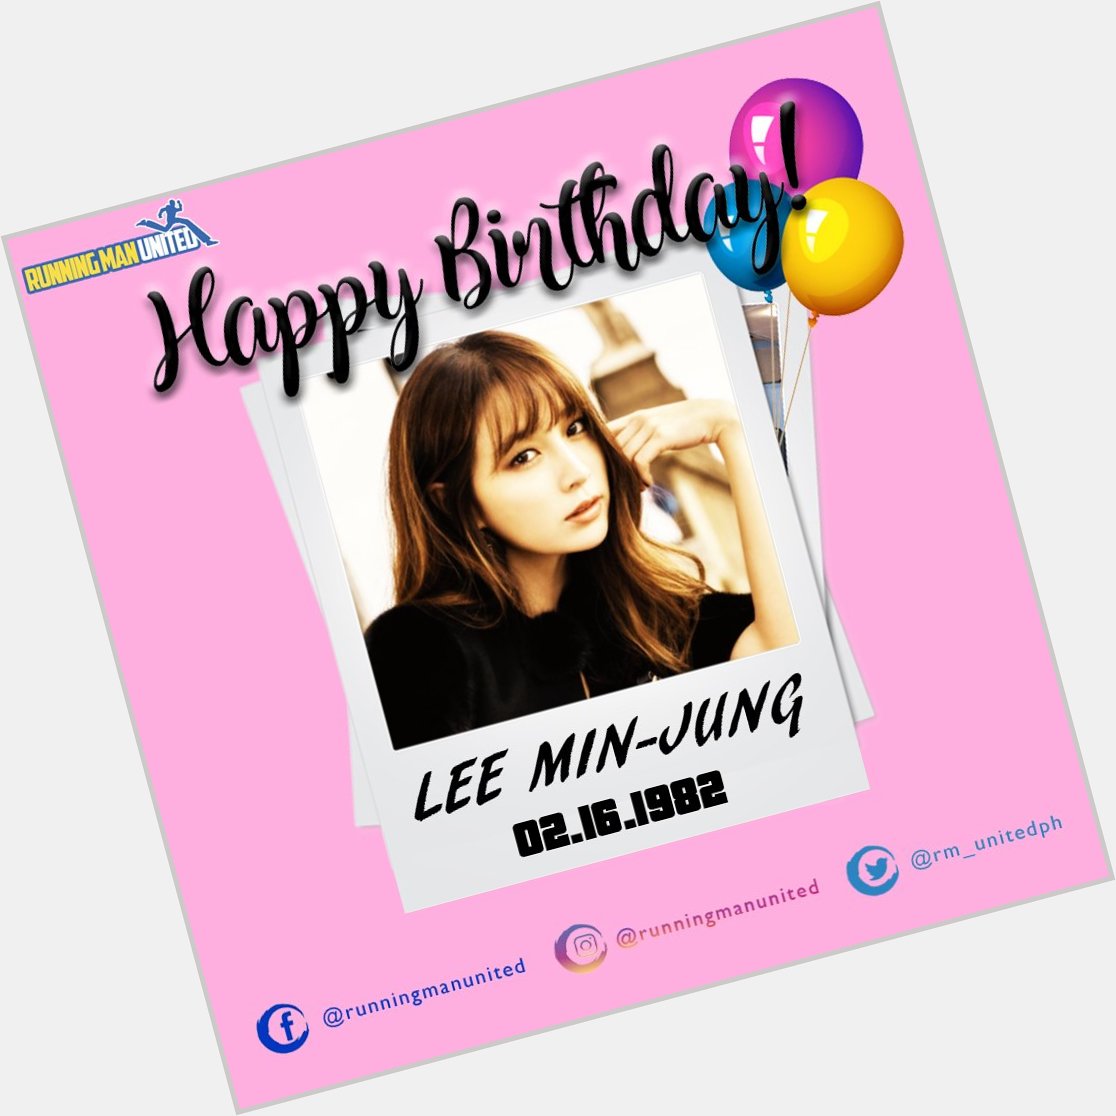 Happy Birthday Lee Min-jung! 